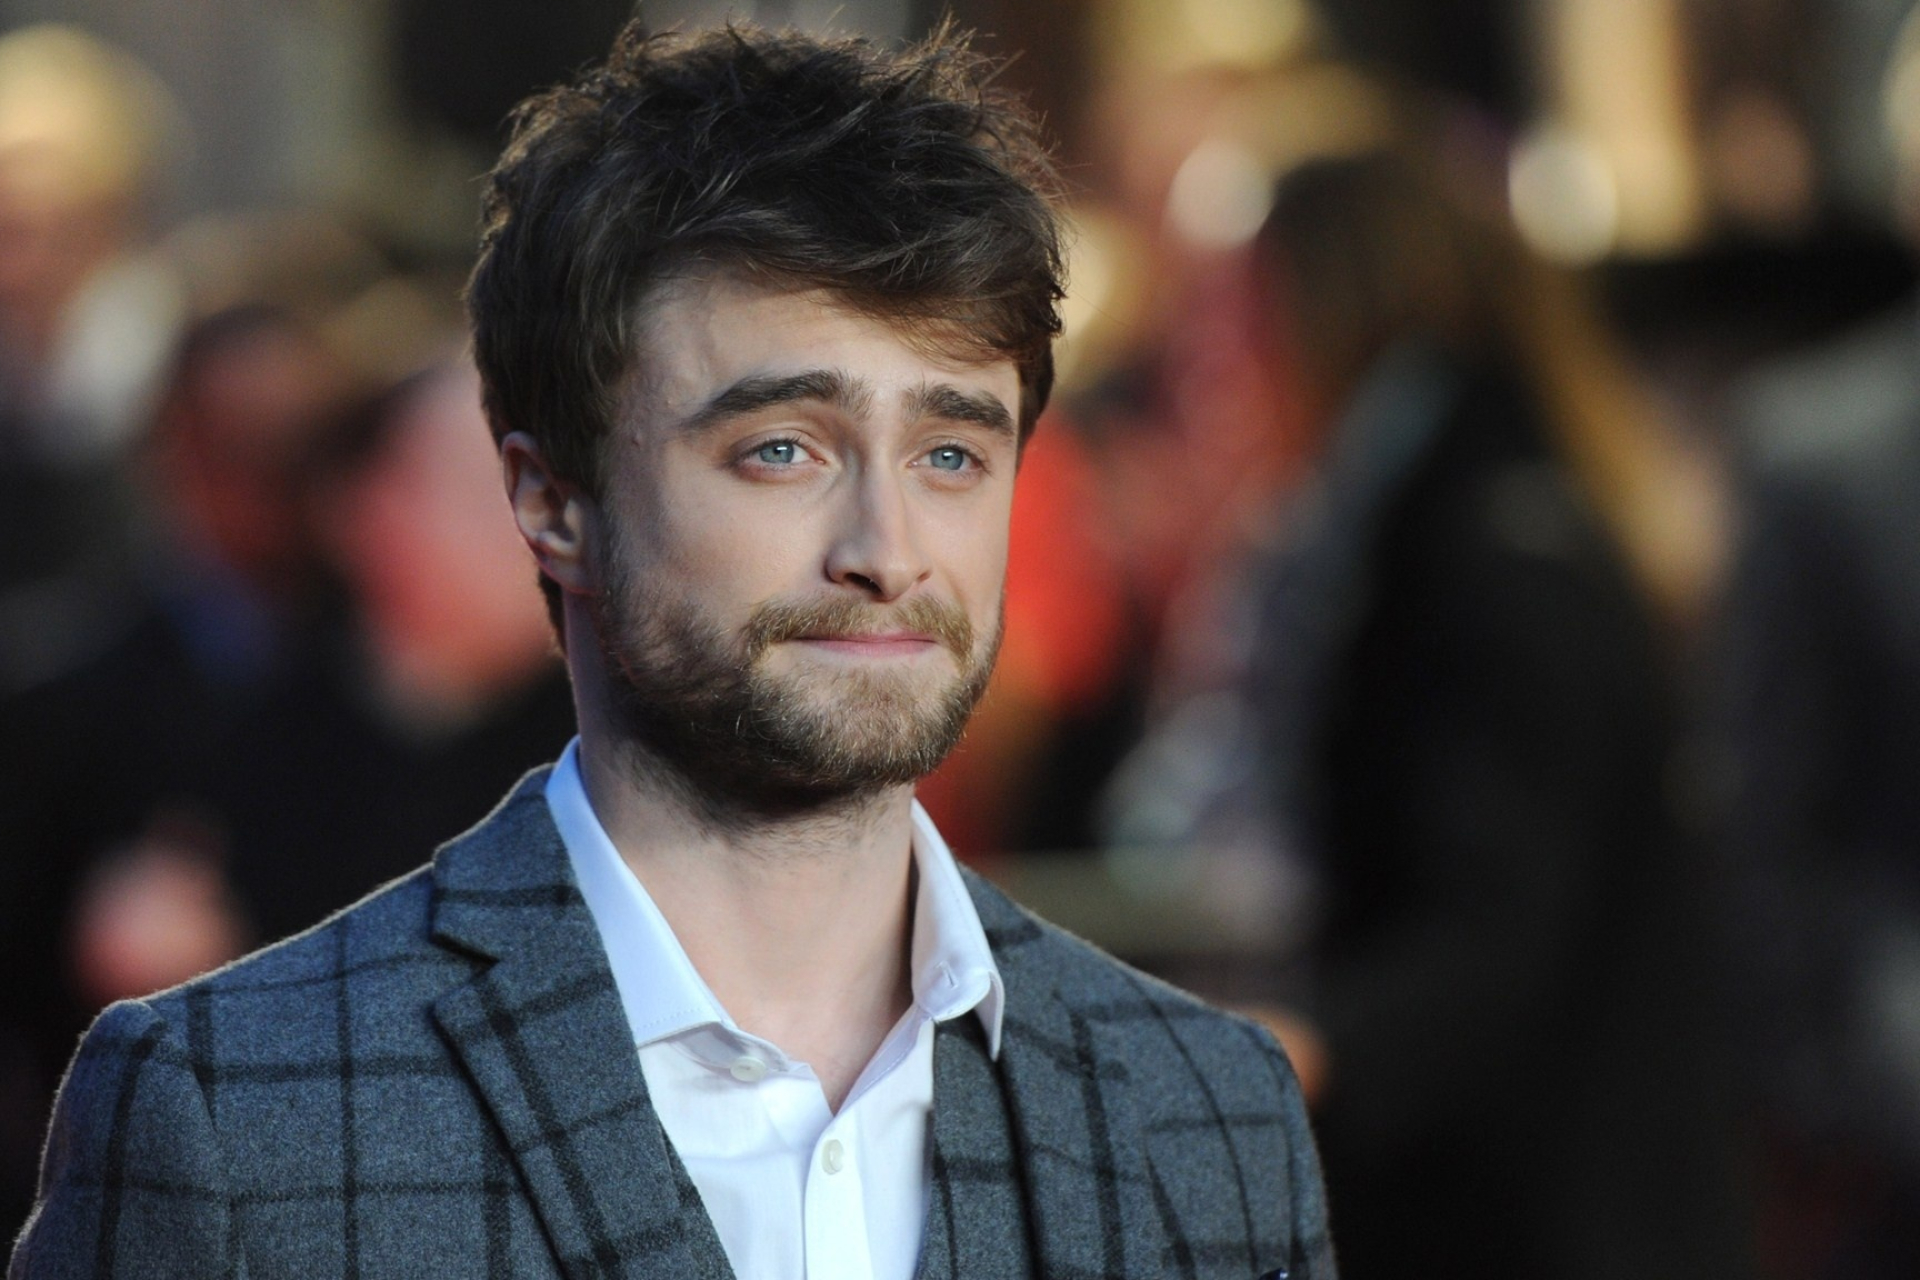 Daniel Radcliffe in 2015, Desktop wallpaper download, Daniel Radcliffe wallpapers, Mobile and tablet, 1920x1280 HD Desktop